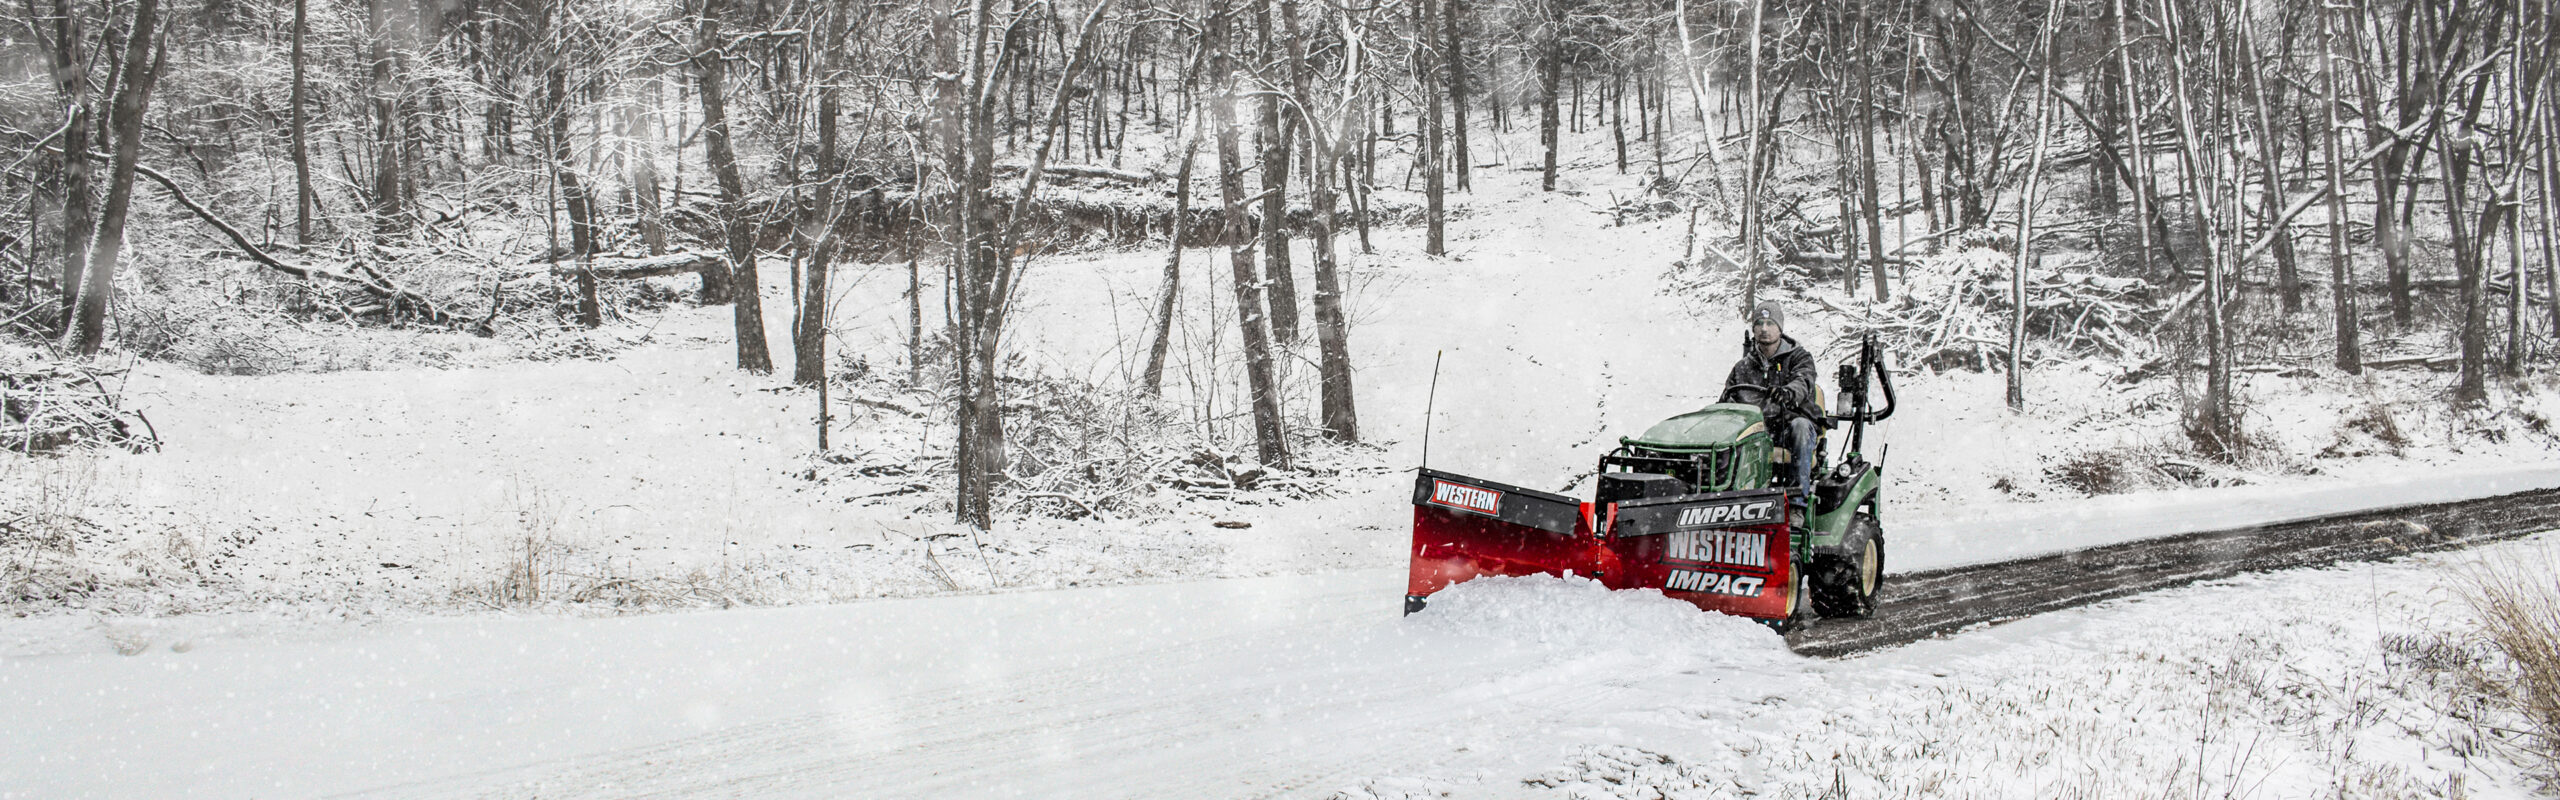 tractor snowplows